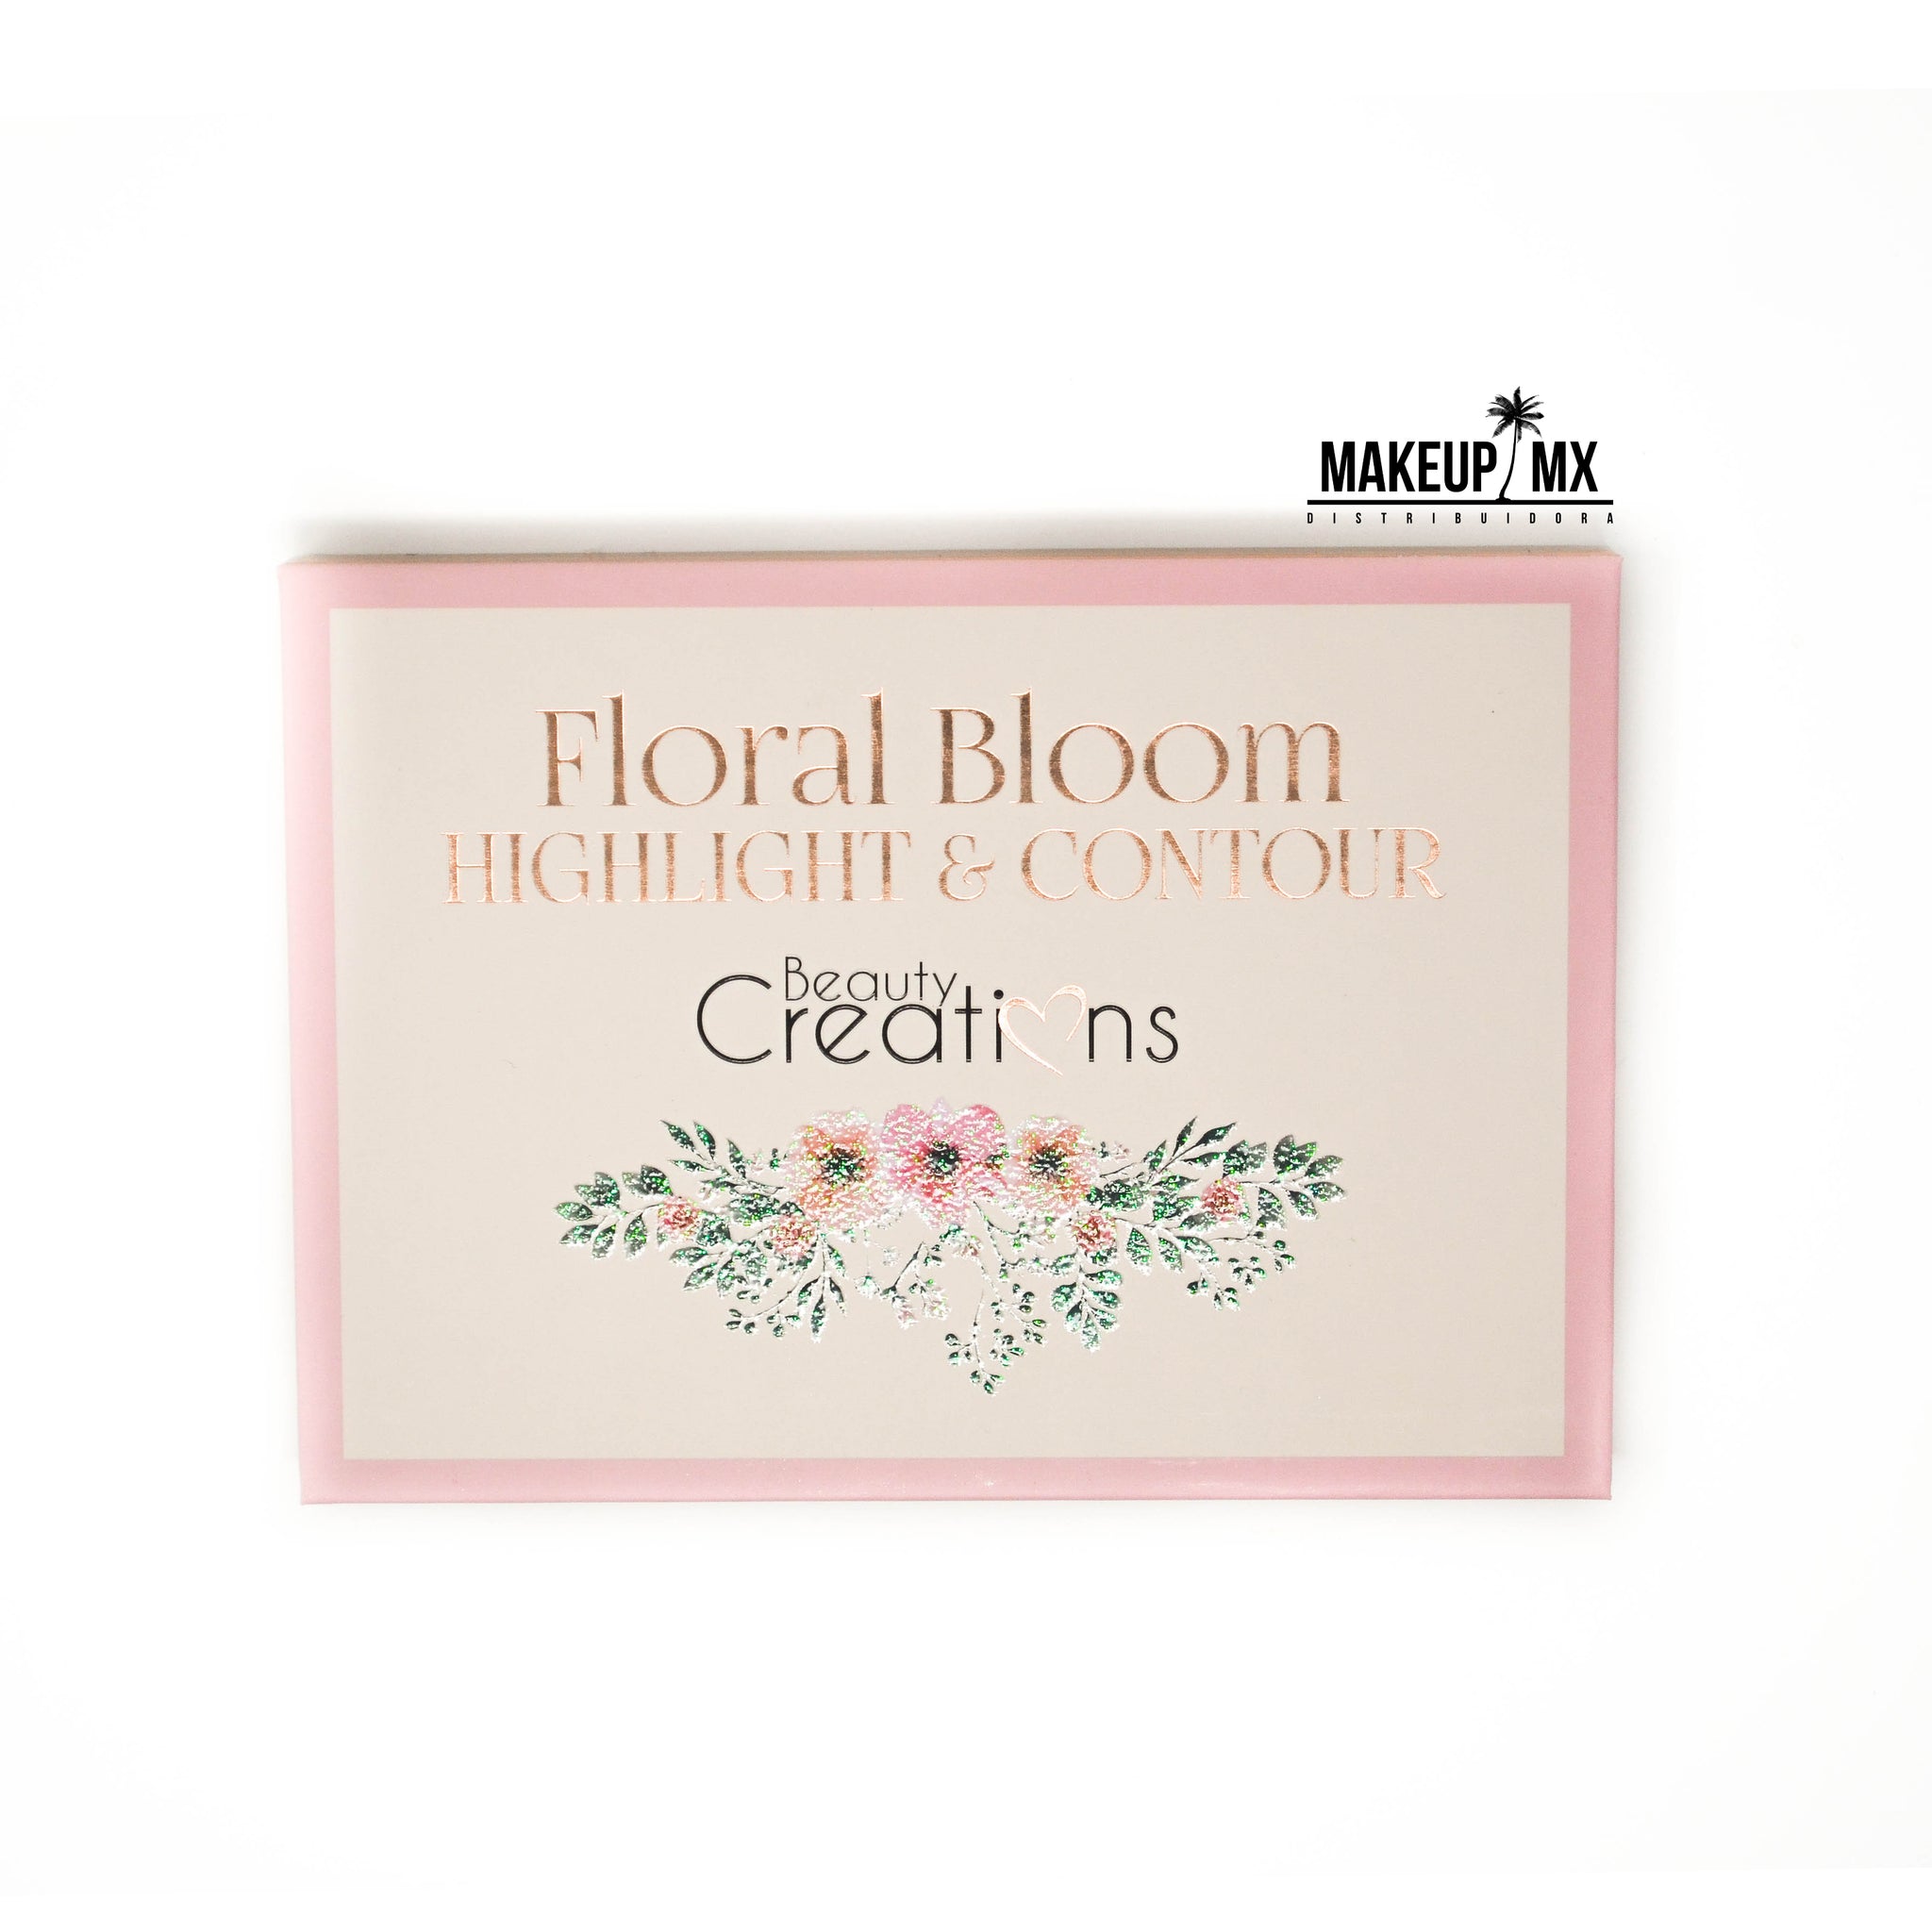 Floral Bloom Highlight & Contour Palette